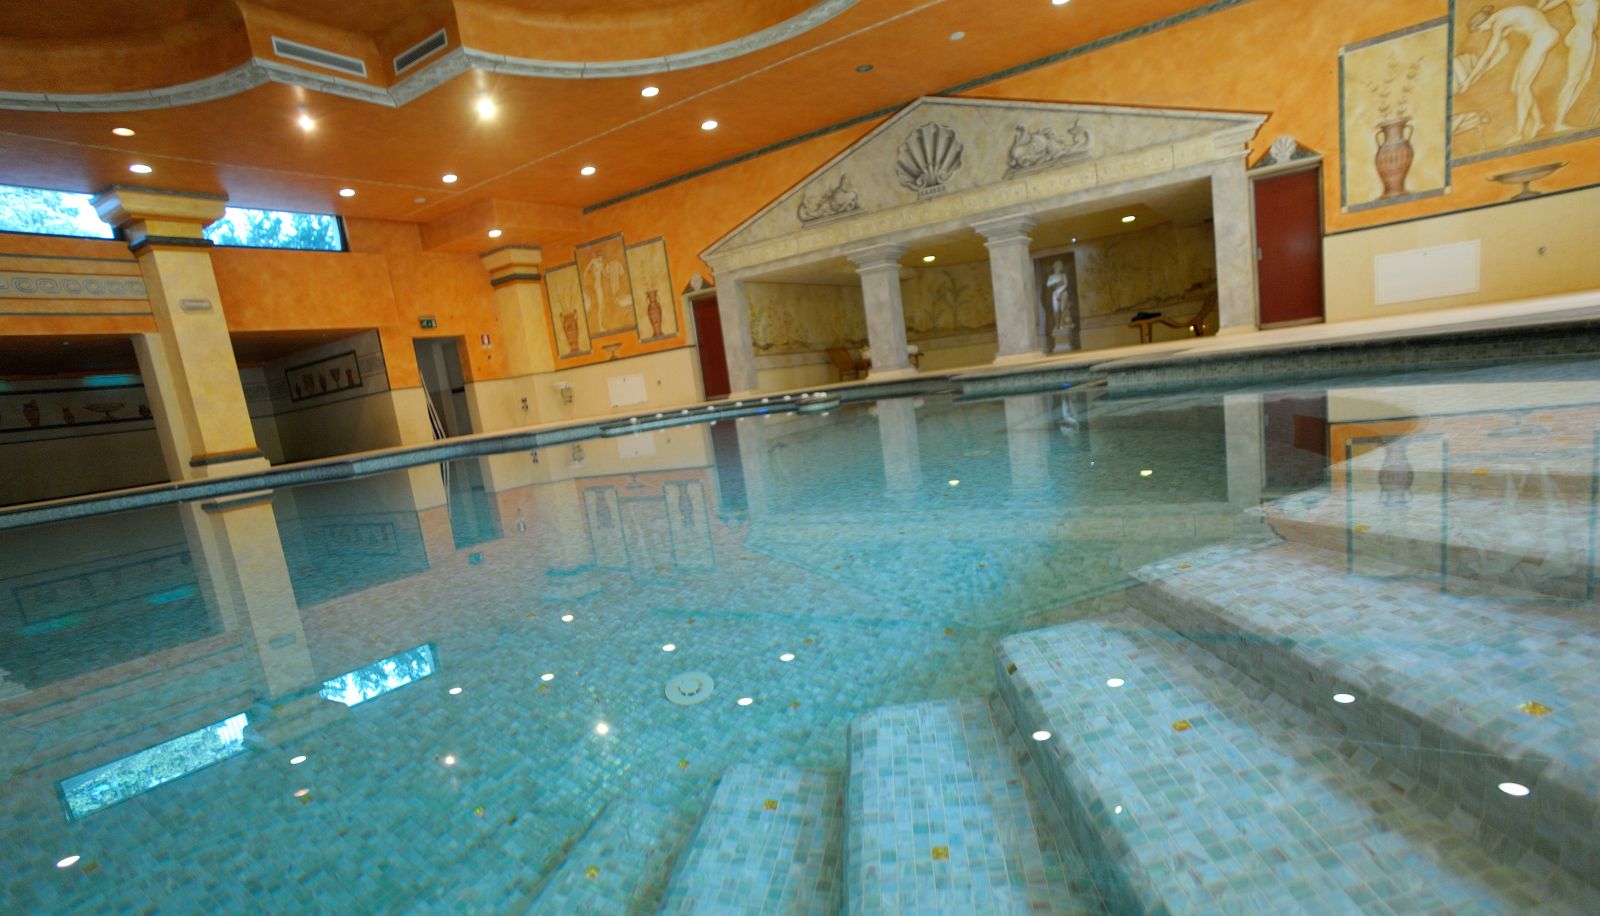 Villa Quaranta Tommasi WINE Hotel & SPA - Pescantina - Great prices at  HOTEL INFO